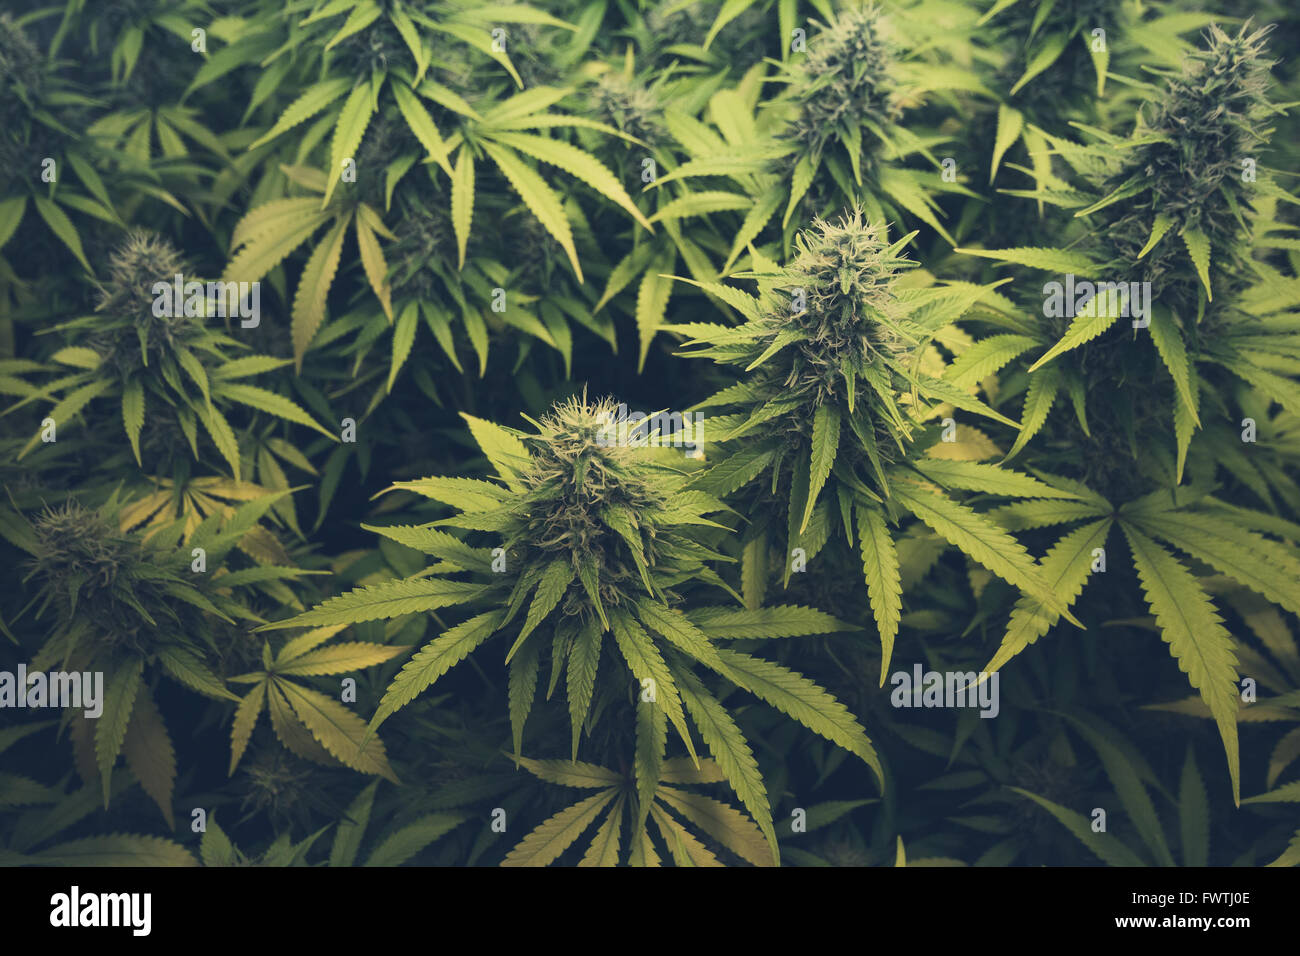 Bud Cannabis/Marihuana Pflanzen - Cannabis, Marihuana, Pflanzen Stockfoto